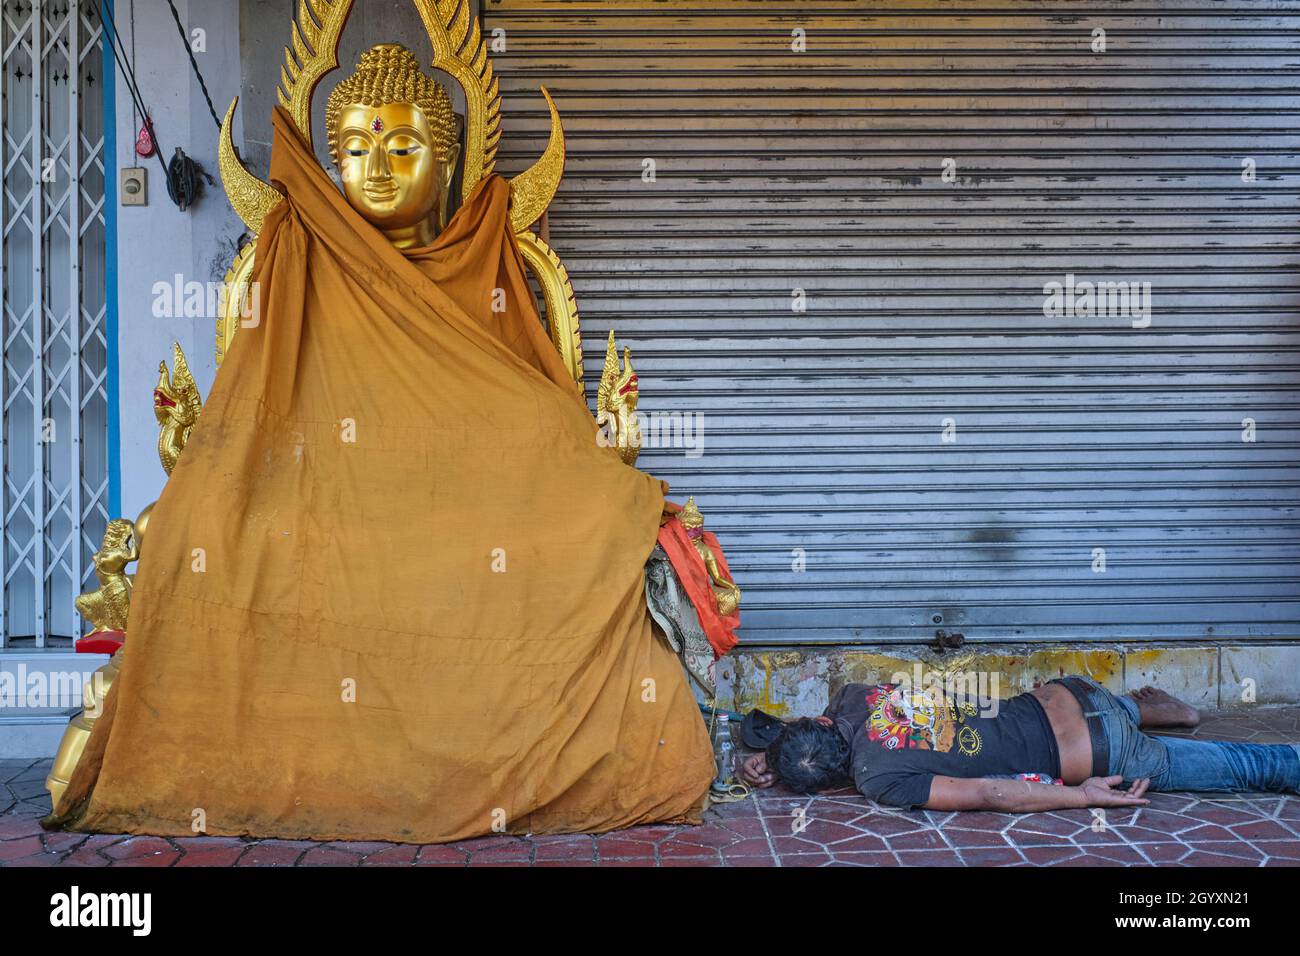 An apparently drunk man sleeps next to a Buddha statue placed outside a shop for Buddhist paraphernalia; Bamrung Muang Road, Bangkok, Thailand Stock Photo